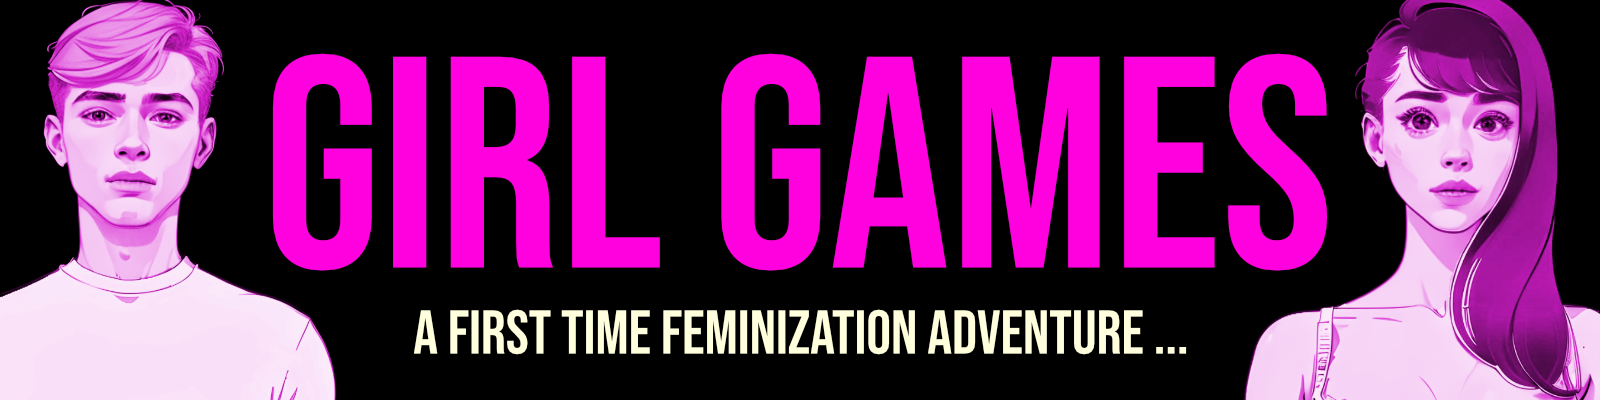 girl games banner.png